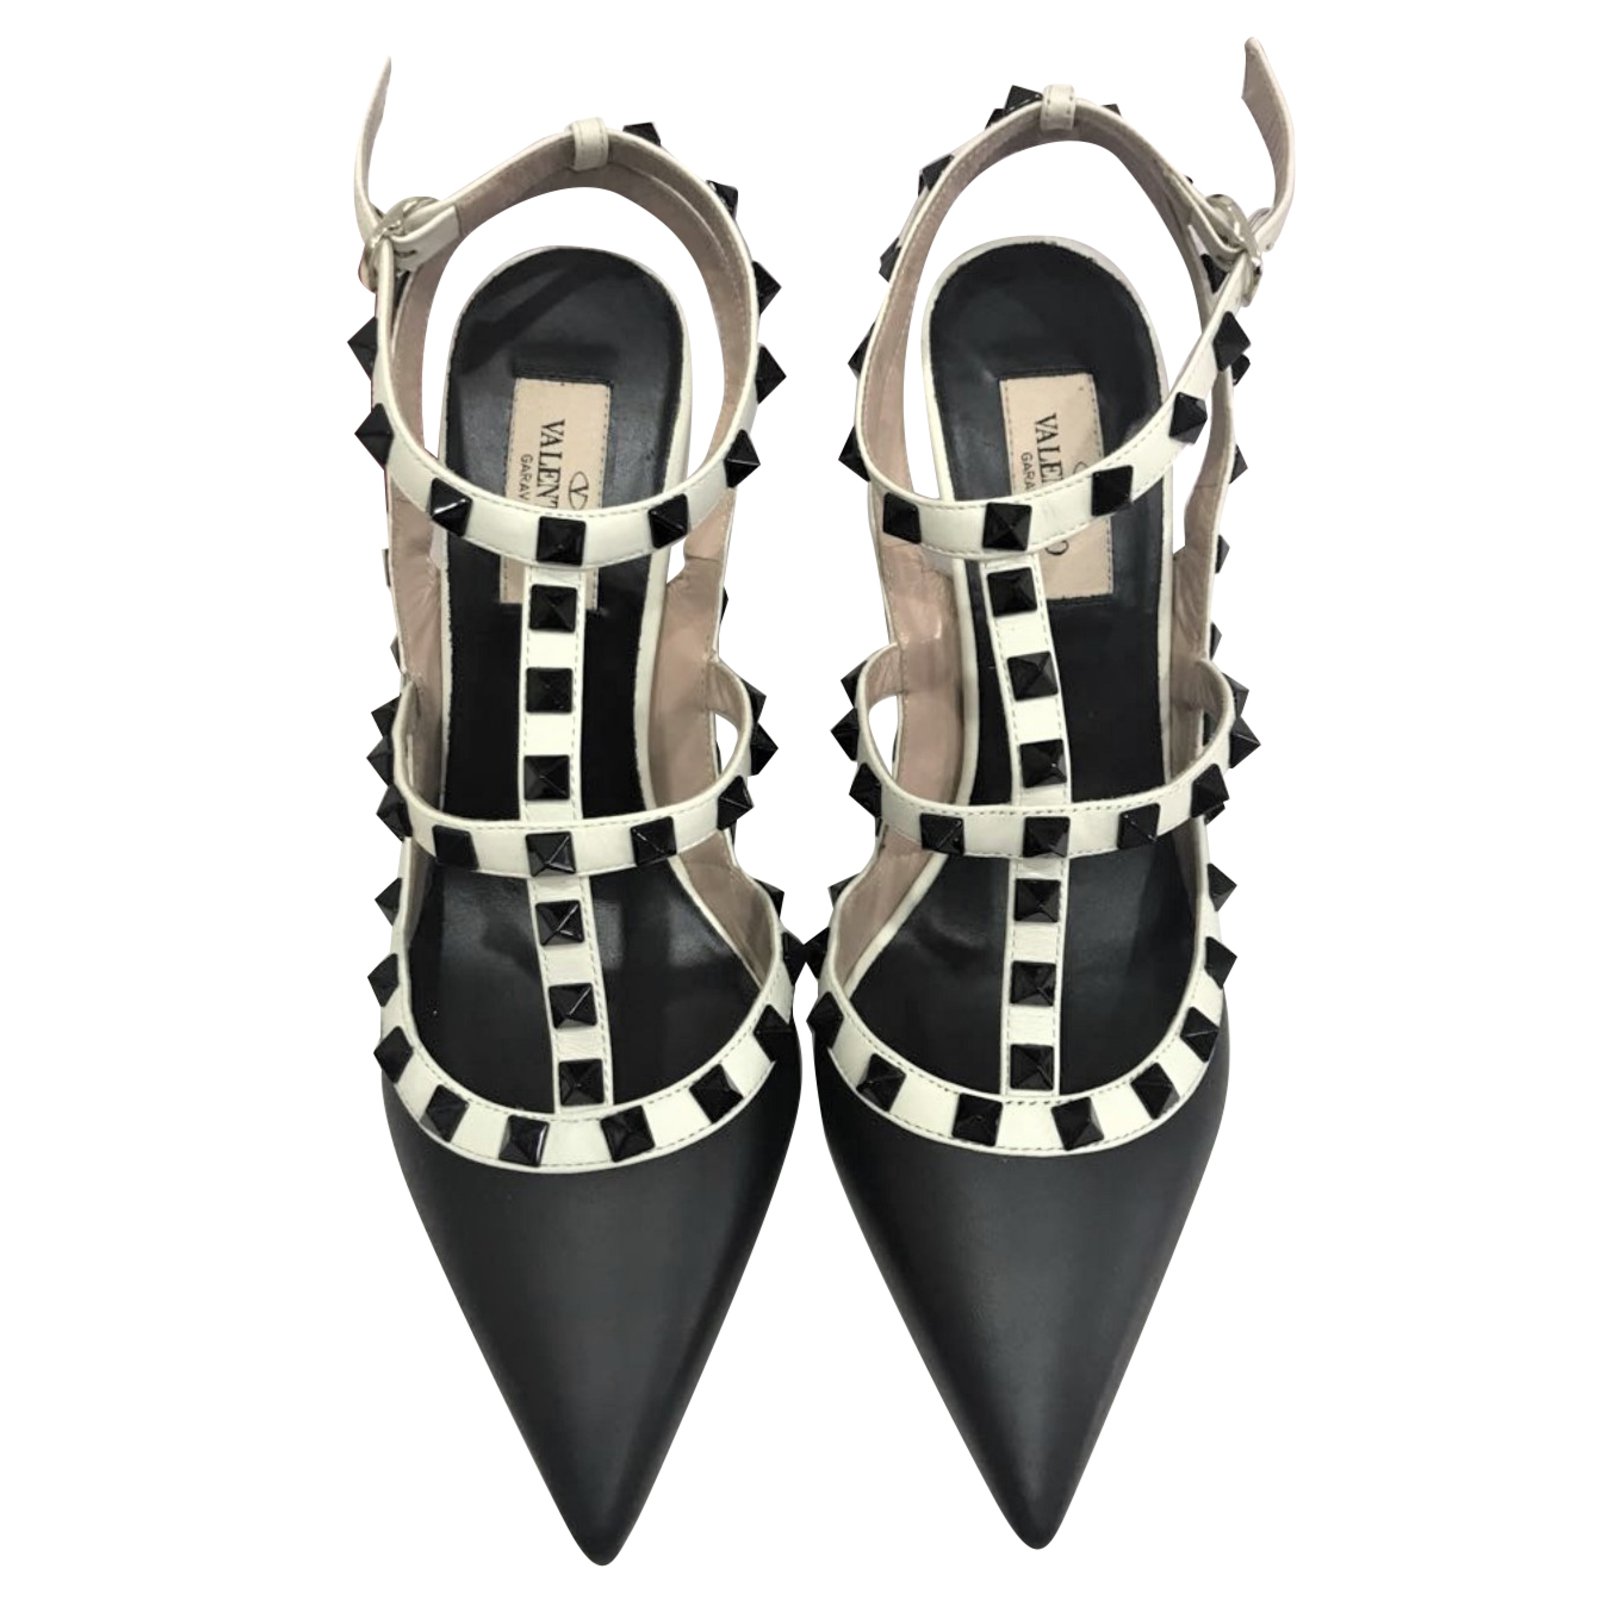 Buy > valentino heels white > in stock